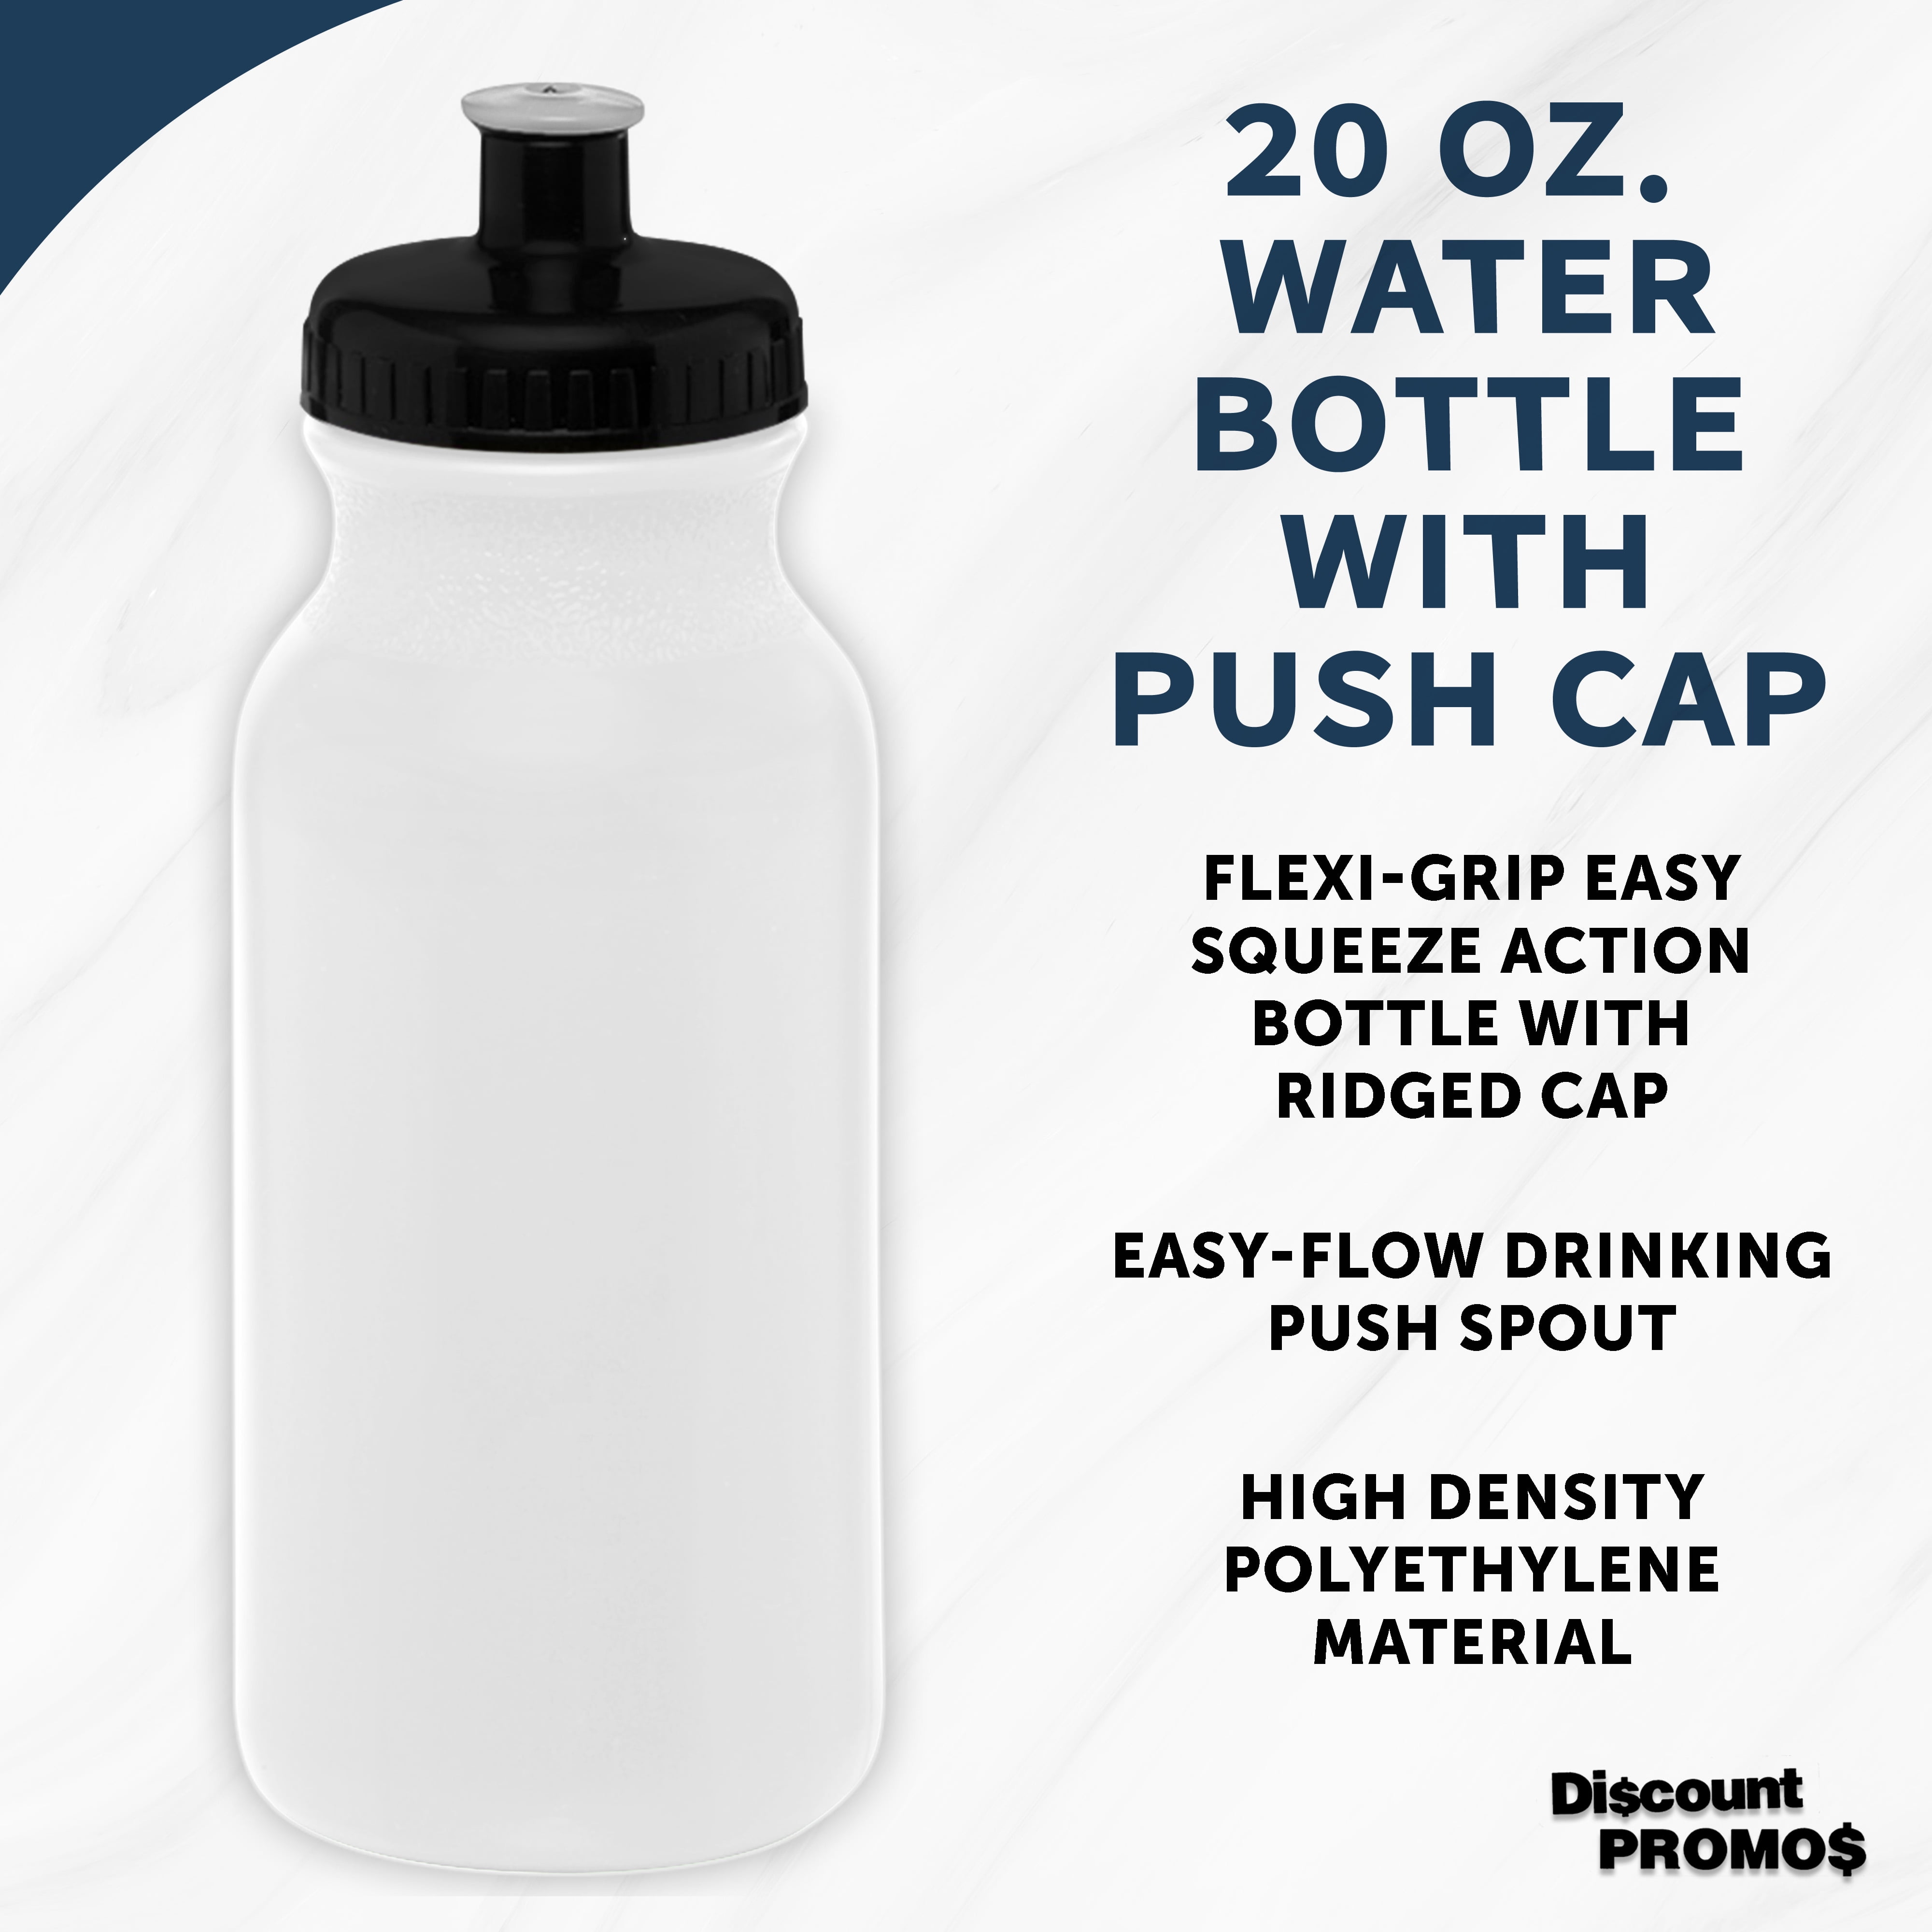 Imprinted : Refresh Clutch Water Bottle - 20 oz. 127005-20